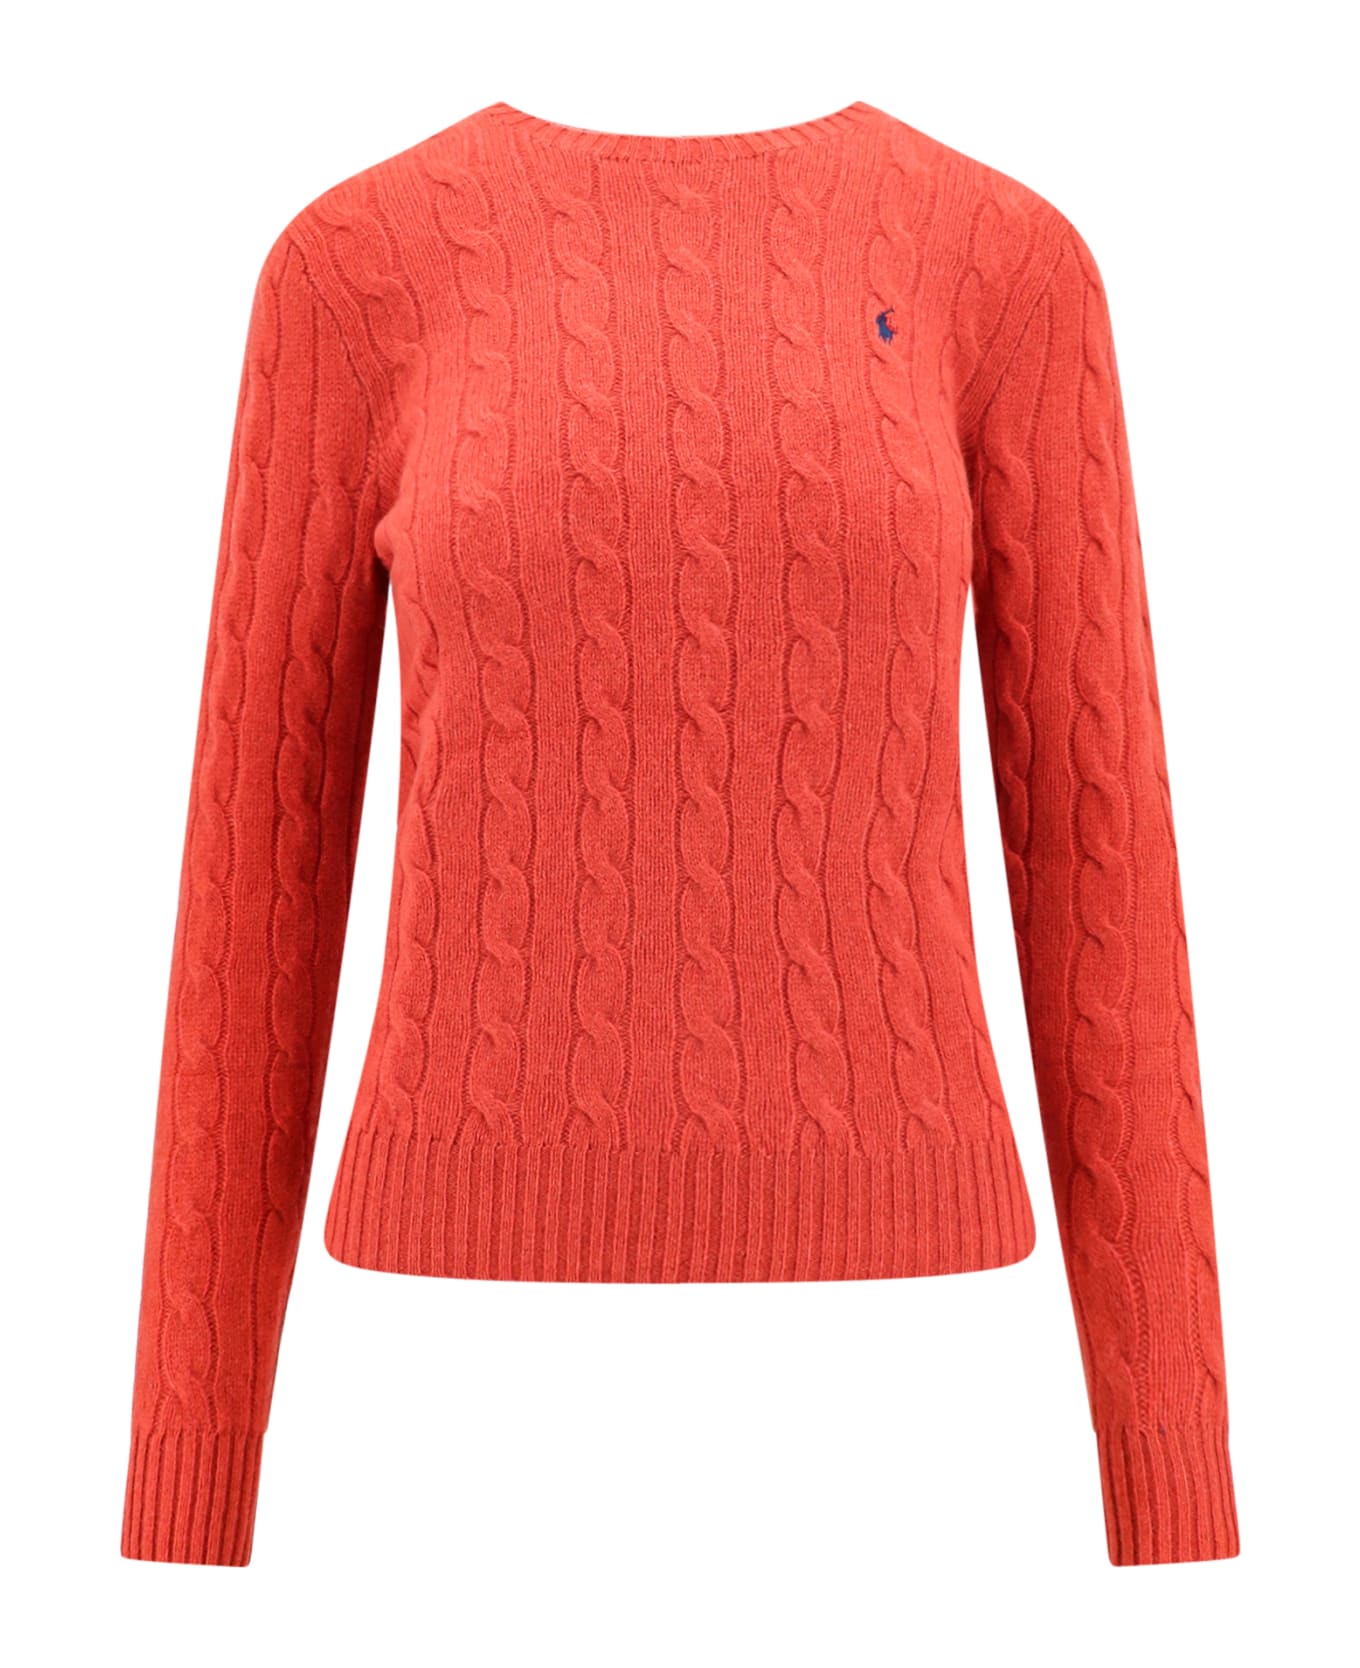 Ralph Lauren Sweater - Faded Red